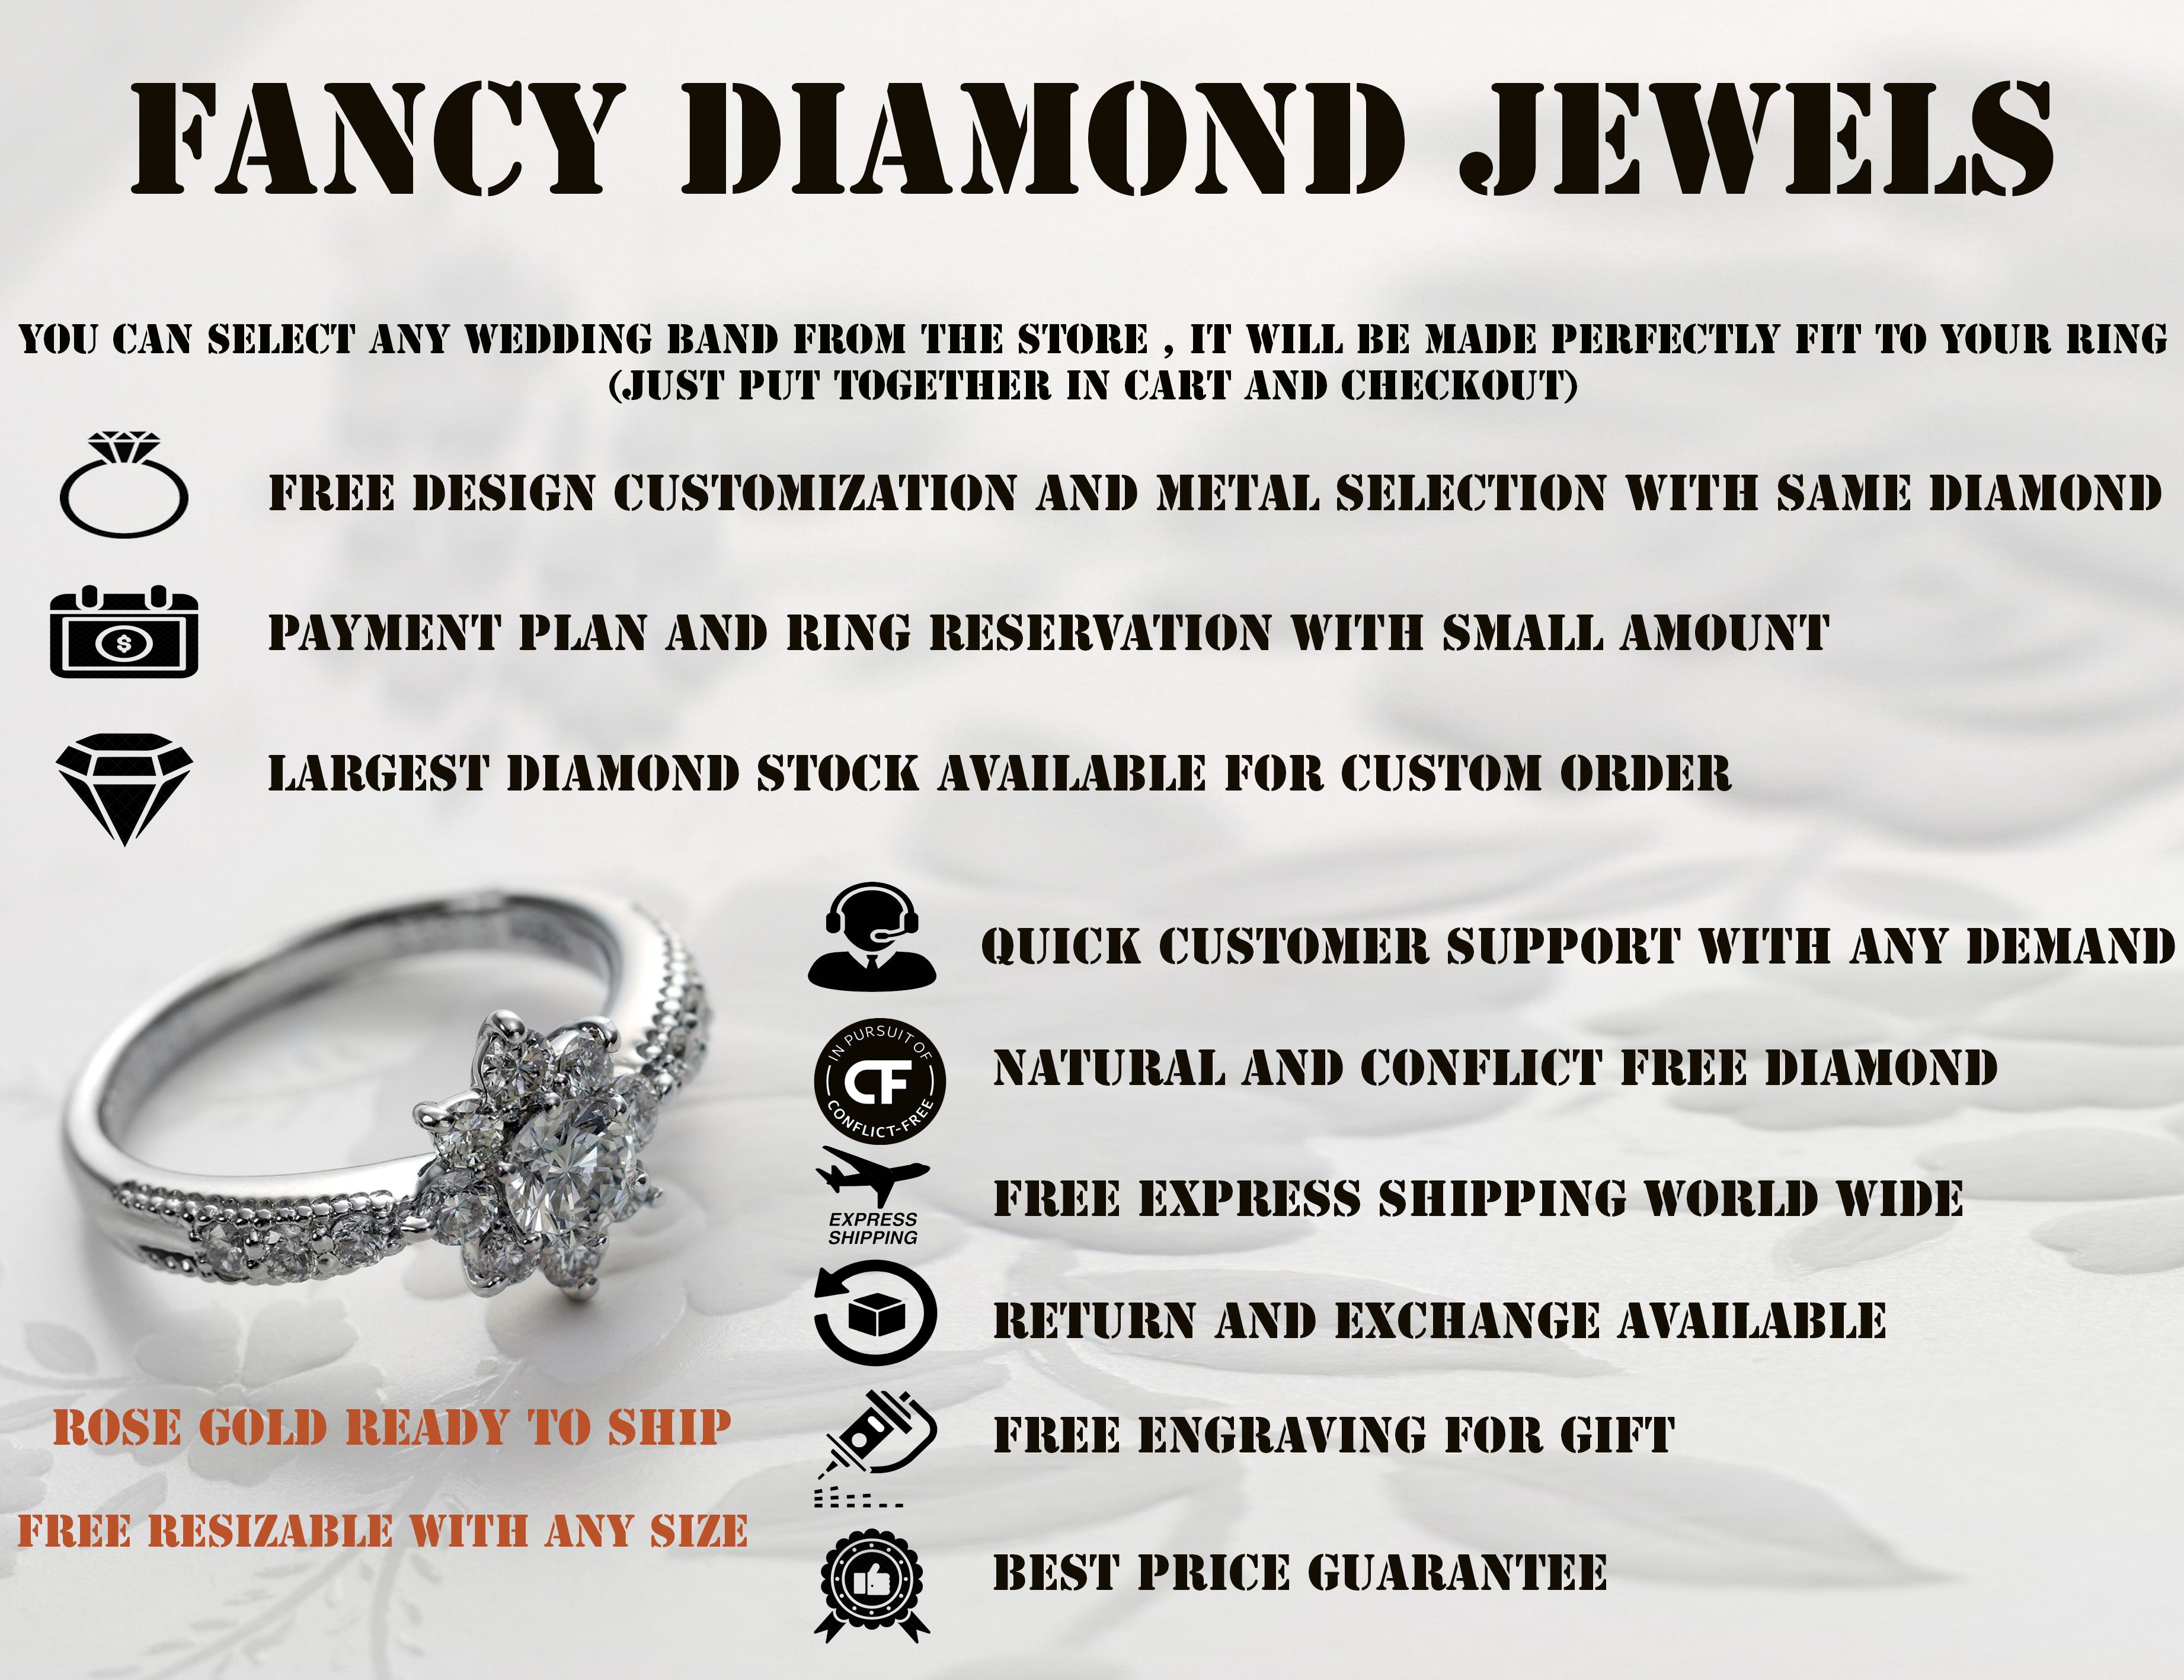 Pentagon Cut Salt And Pepper Diamond Ring 0.64 Ct 6.50 MM Pentagon Diamond Ring 14K Rose Gold Silver Engagement Ring Gift For Her QL1356